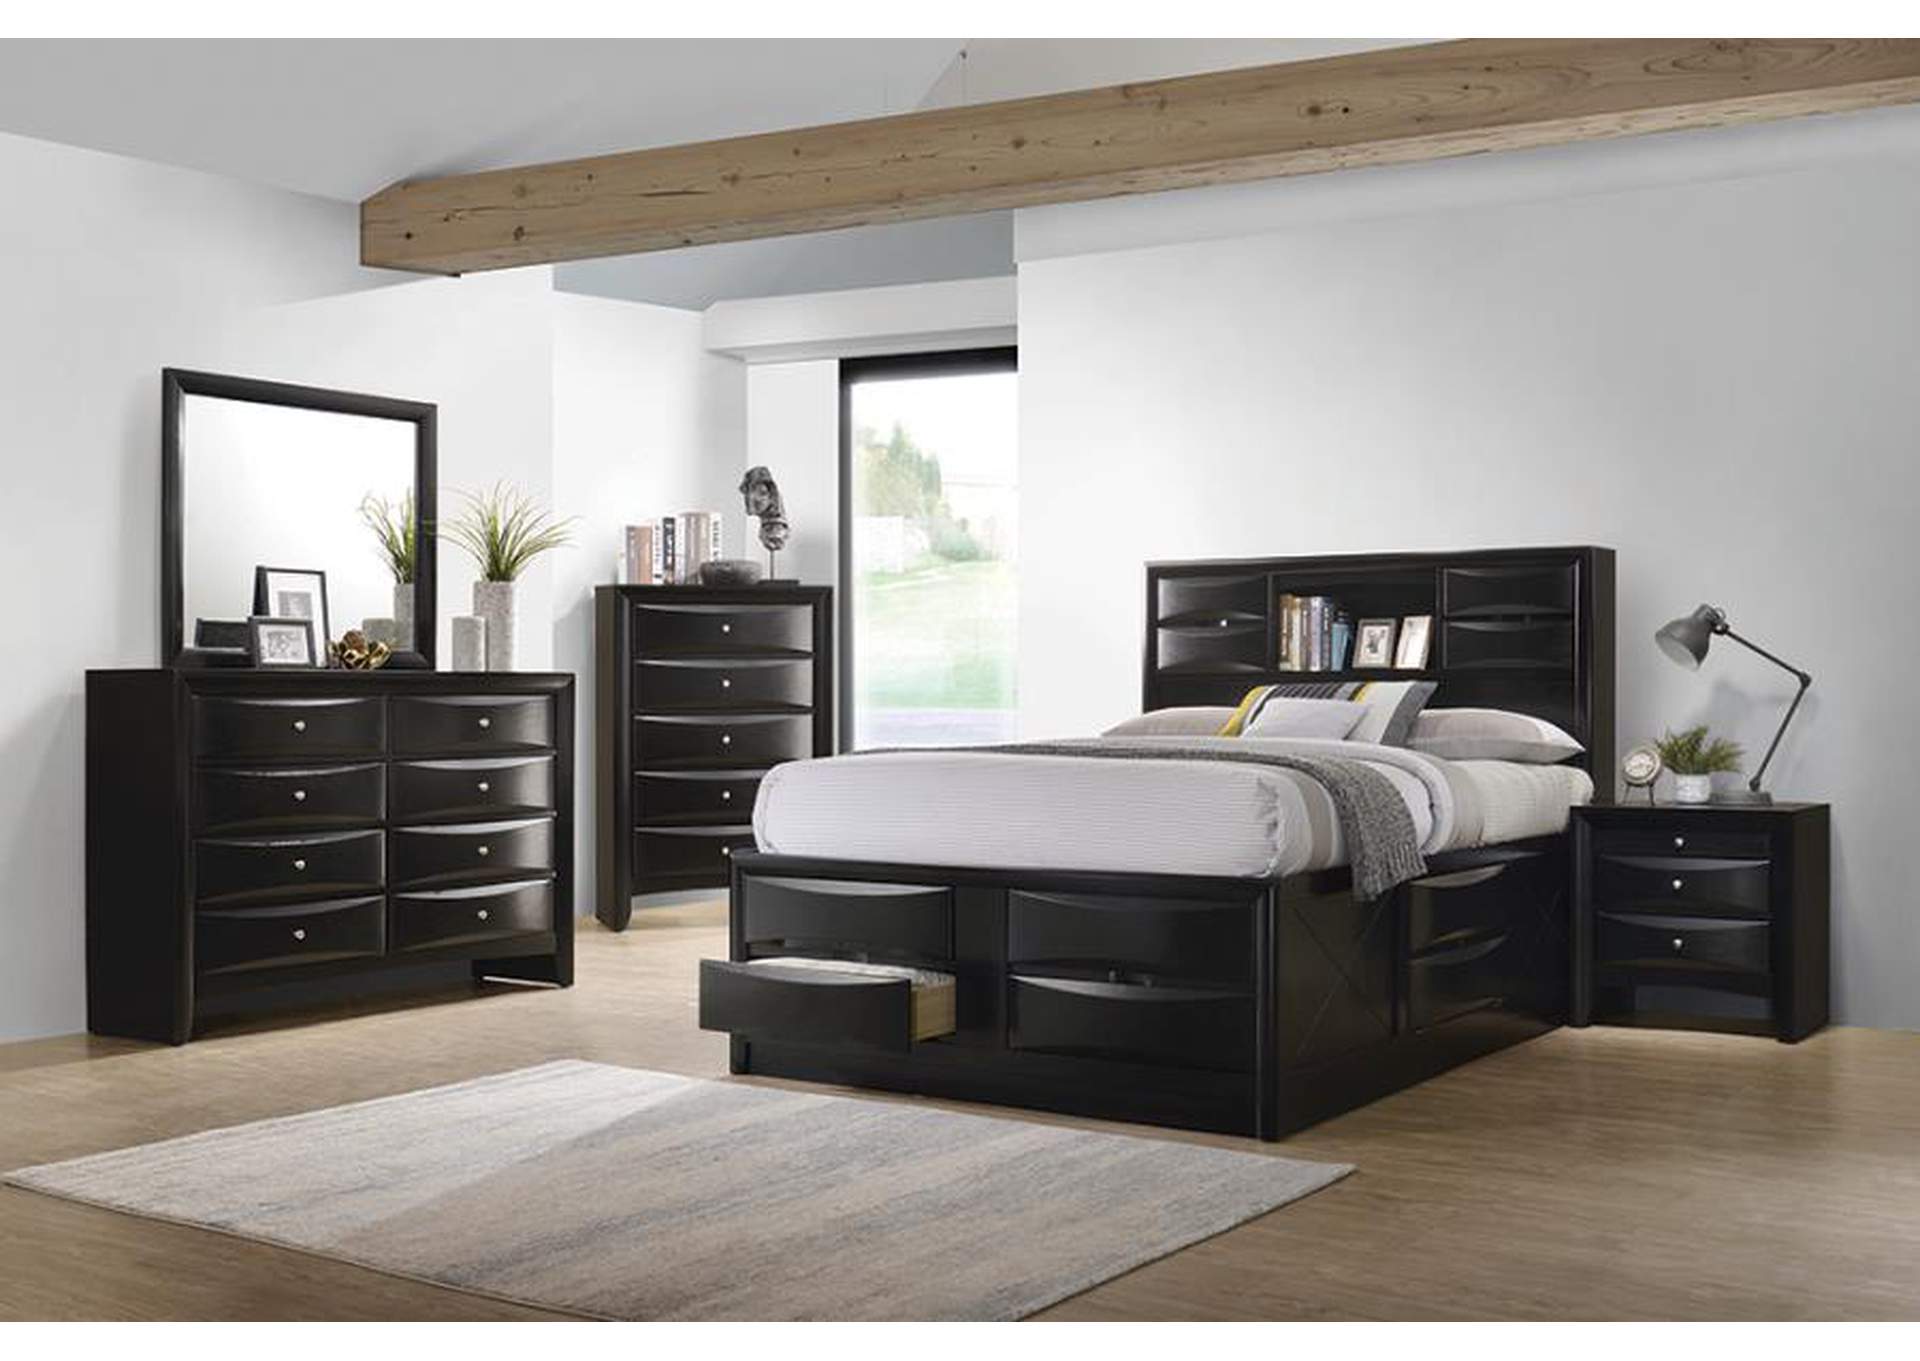 Briana Storage Bedroom Set With Bookcase Headboard Black,Coaster Furniture